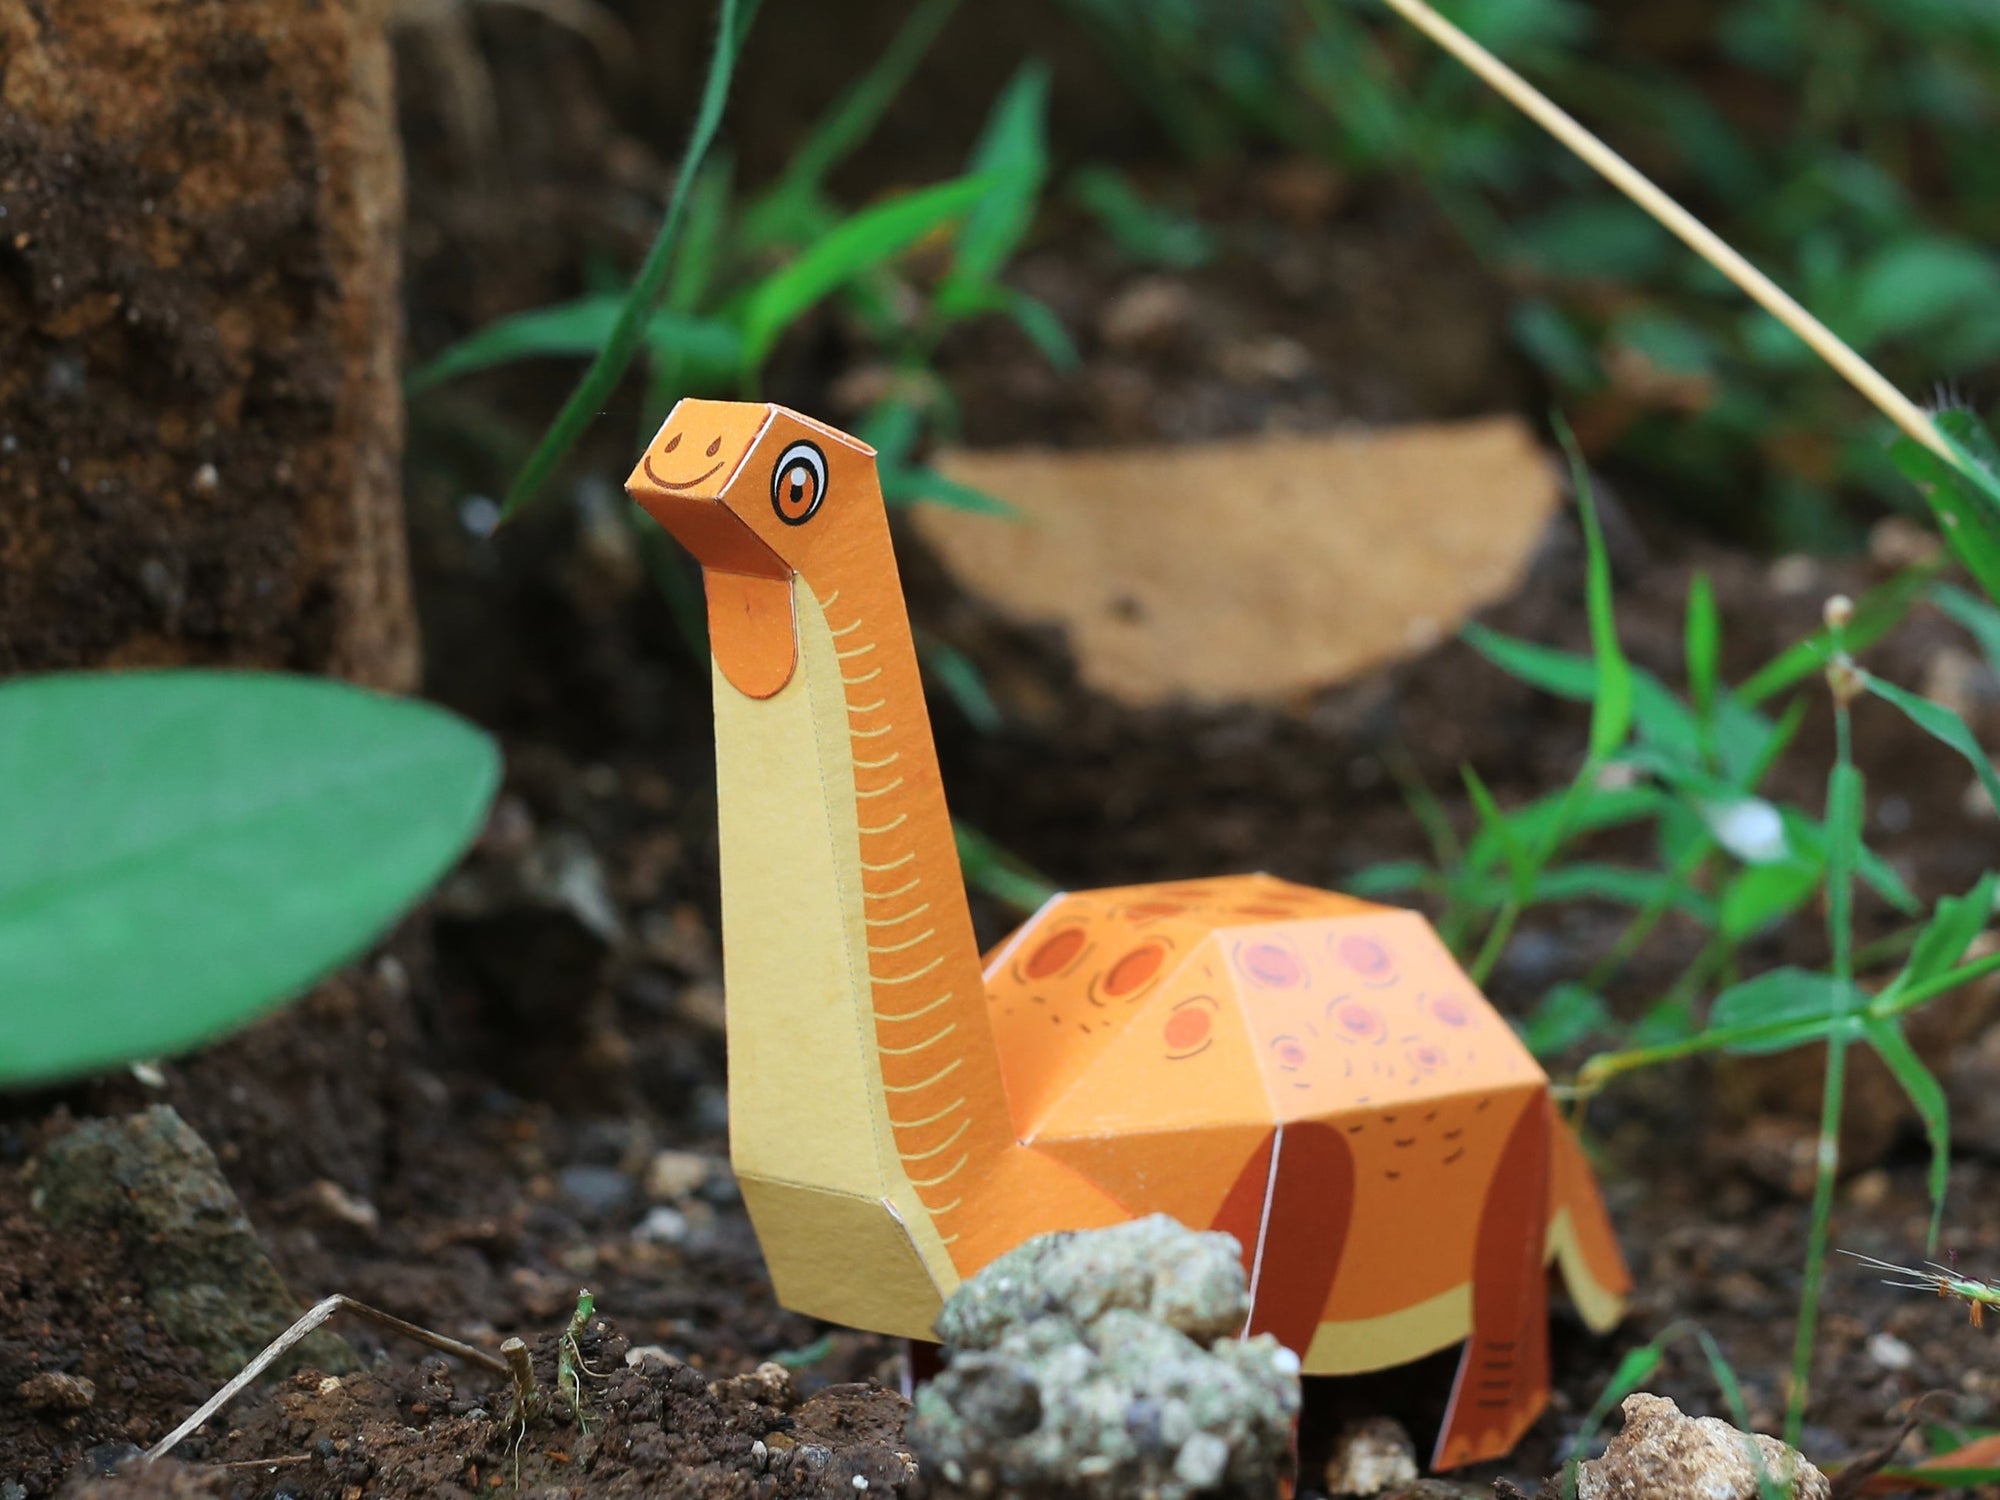 DIY Mini Friends | Prehistoric Animals Series : Sauropod